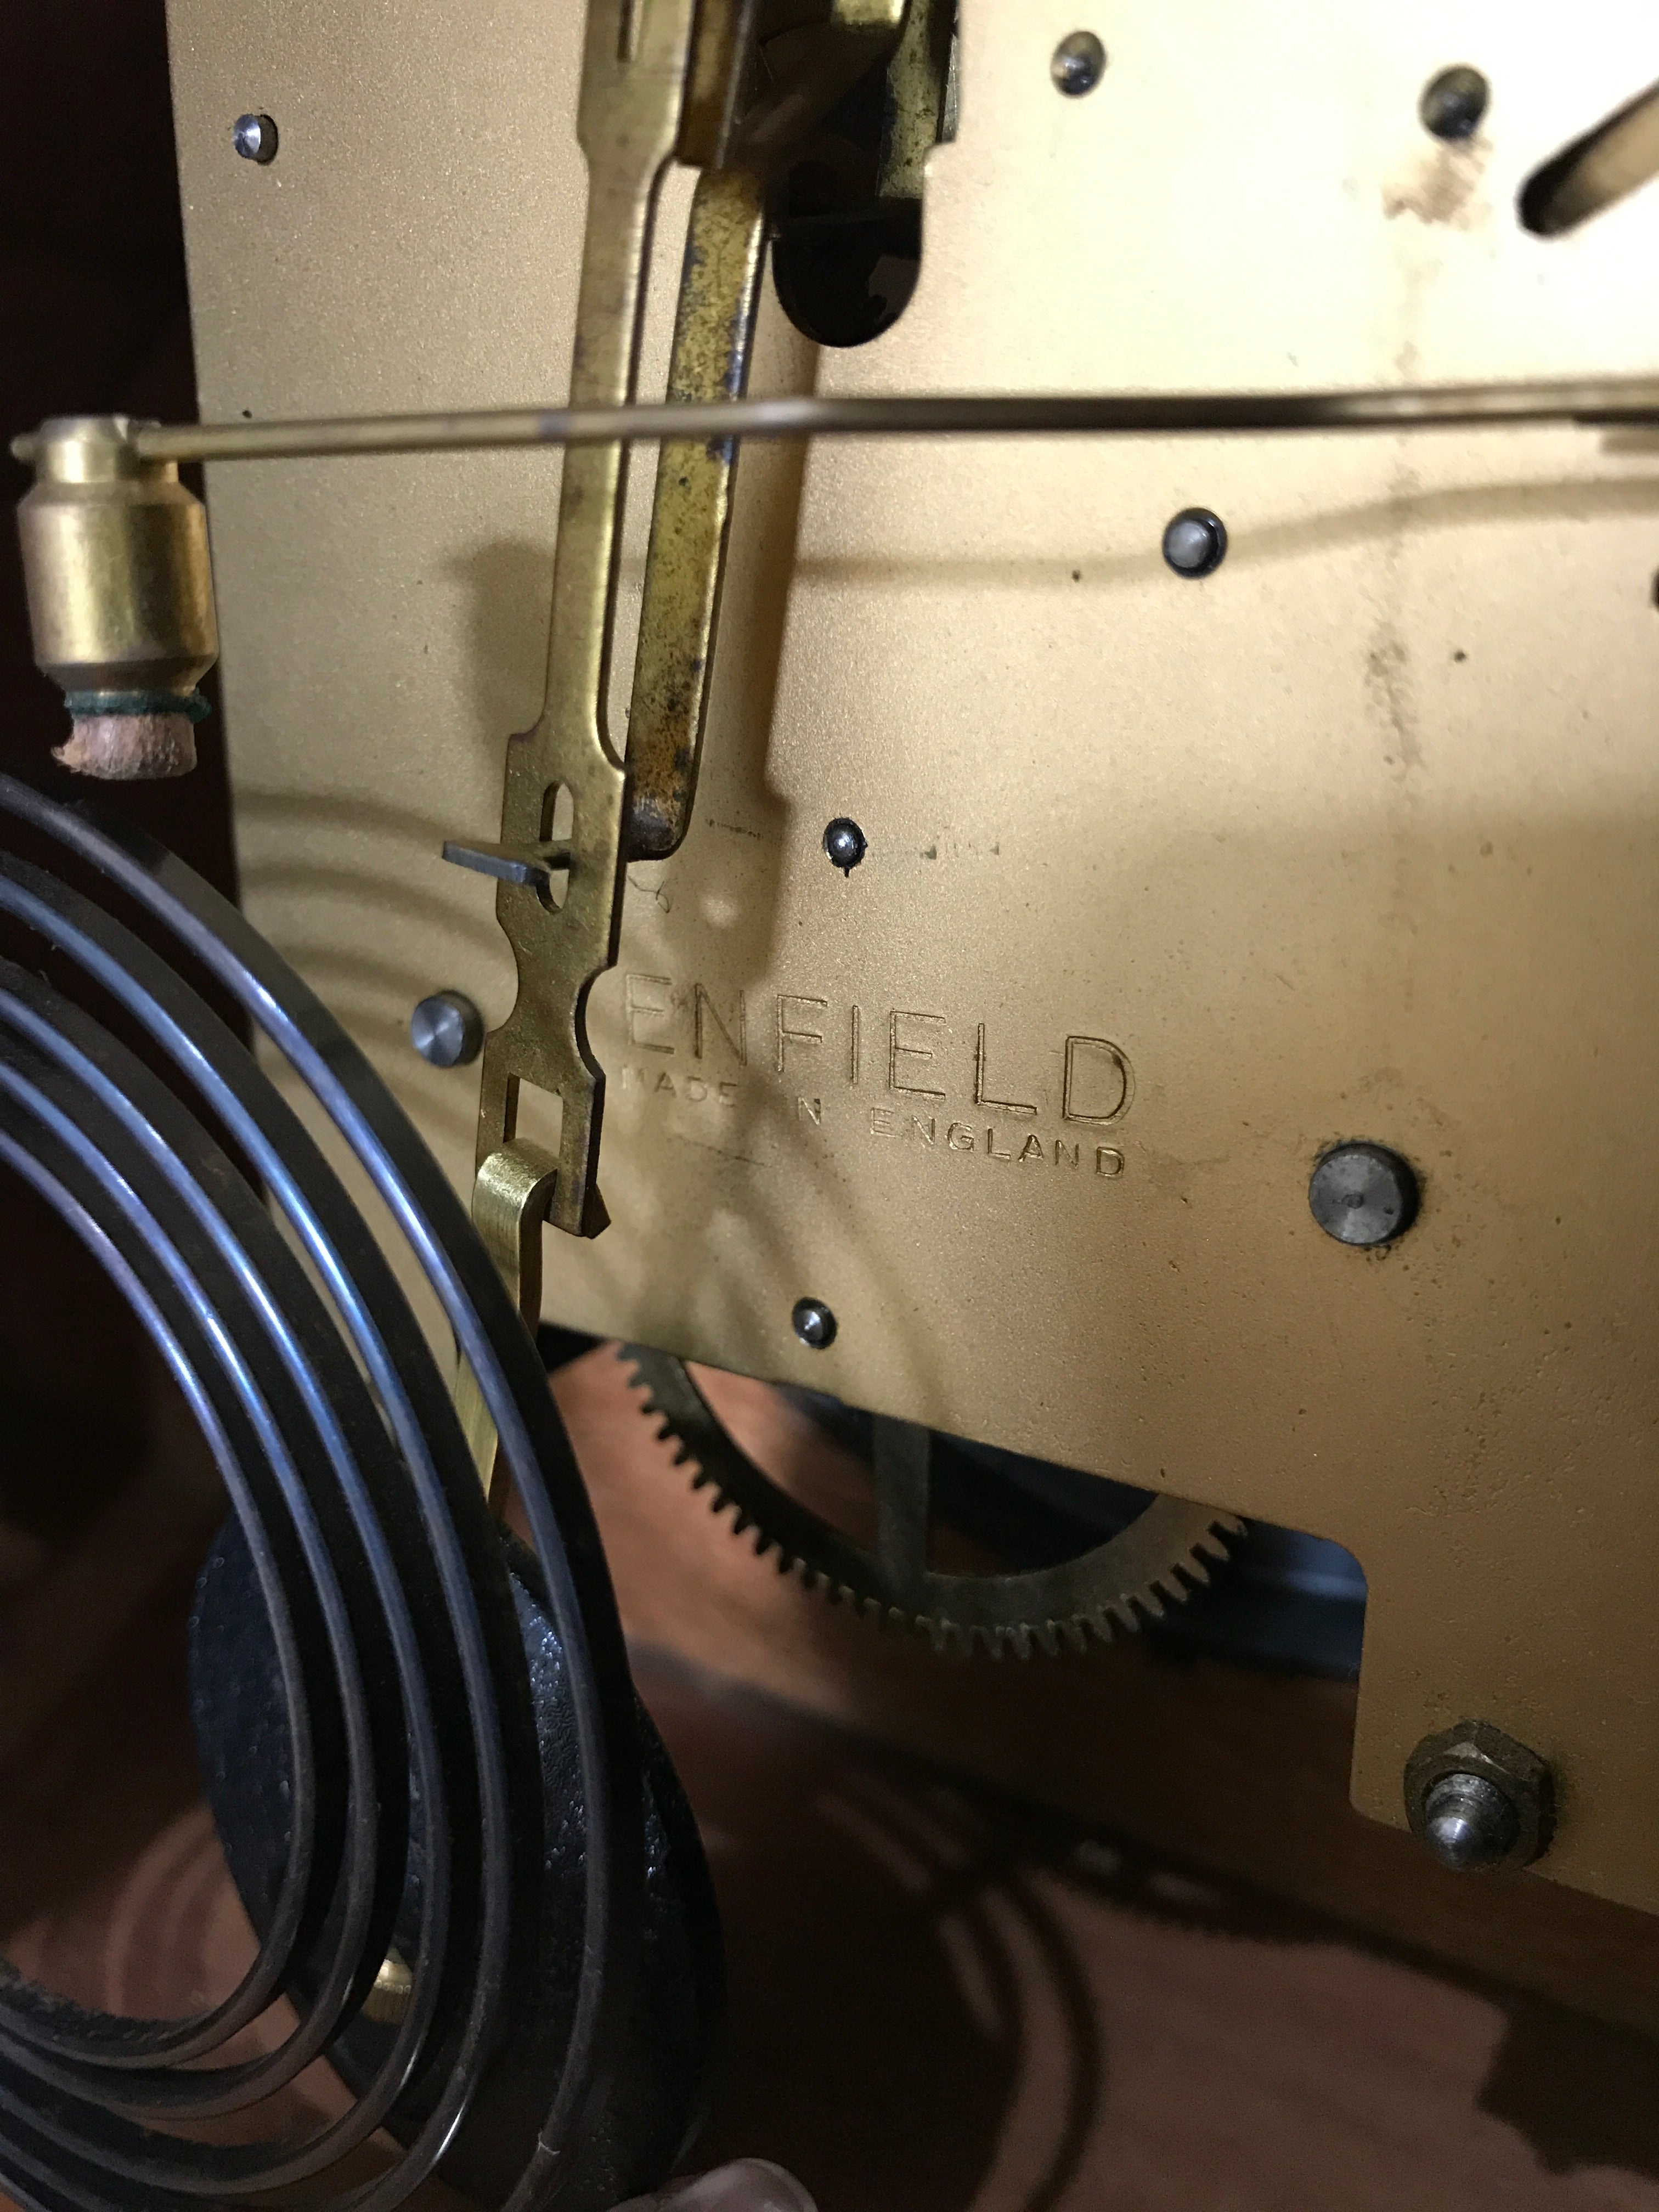 Vintage Enfield Chime Mantel Clock | eXibit collection